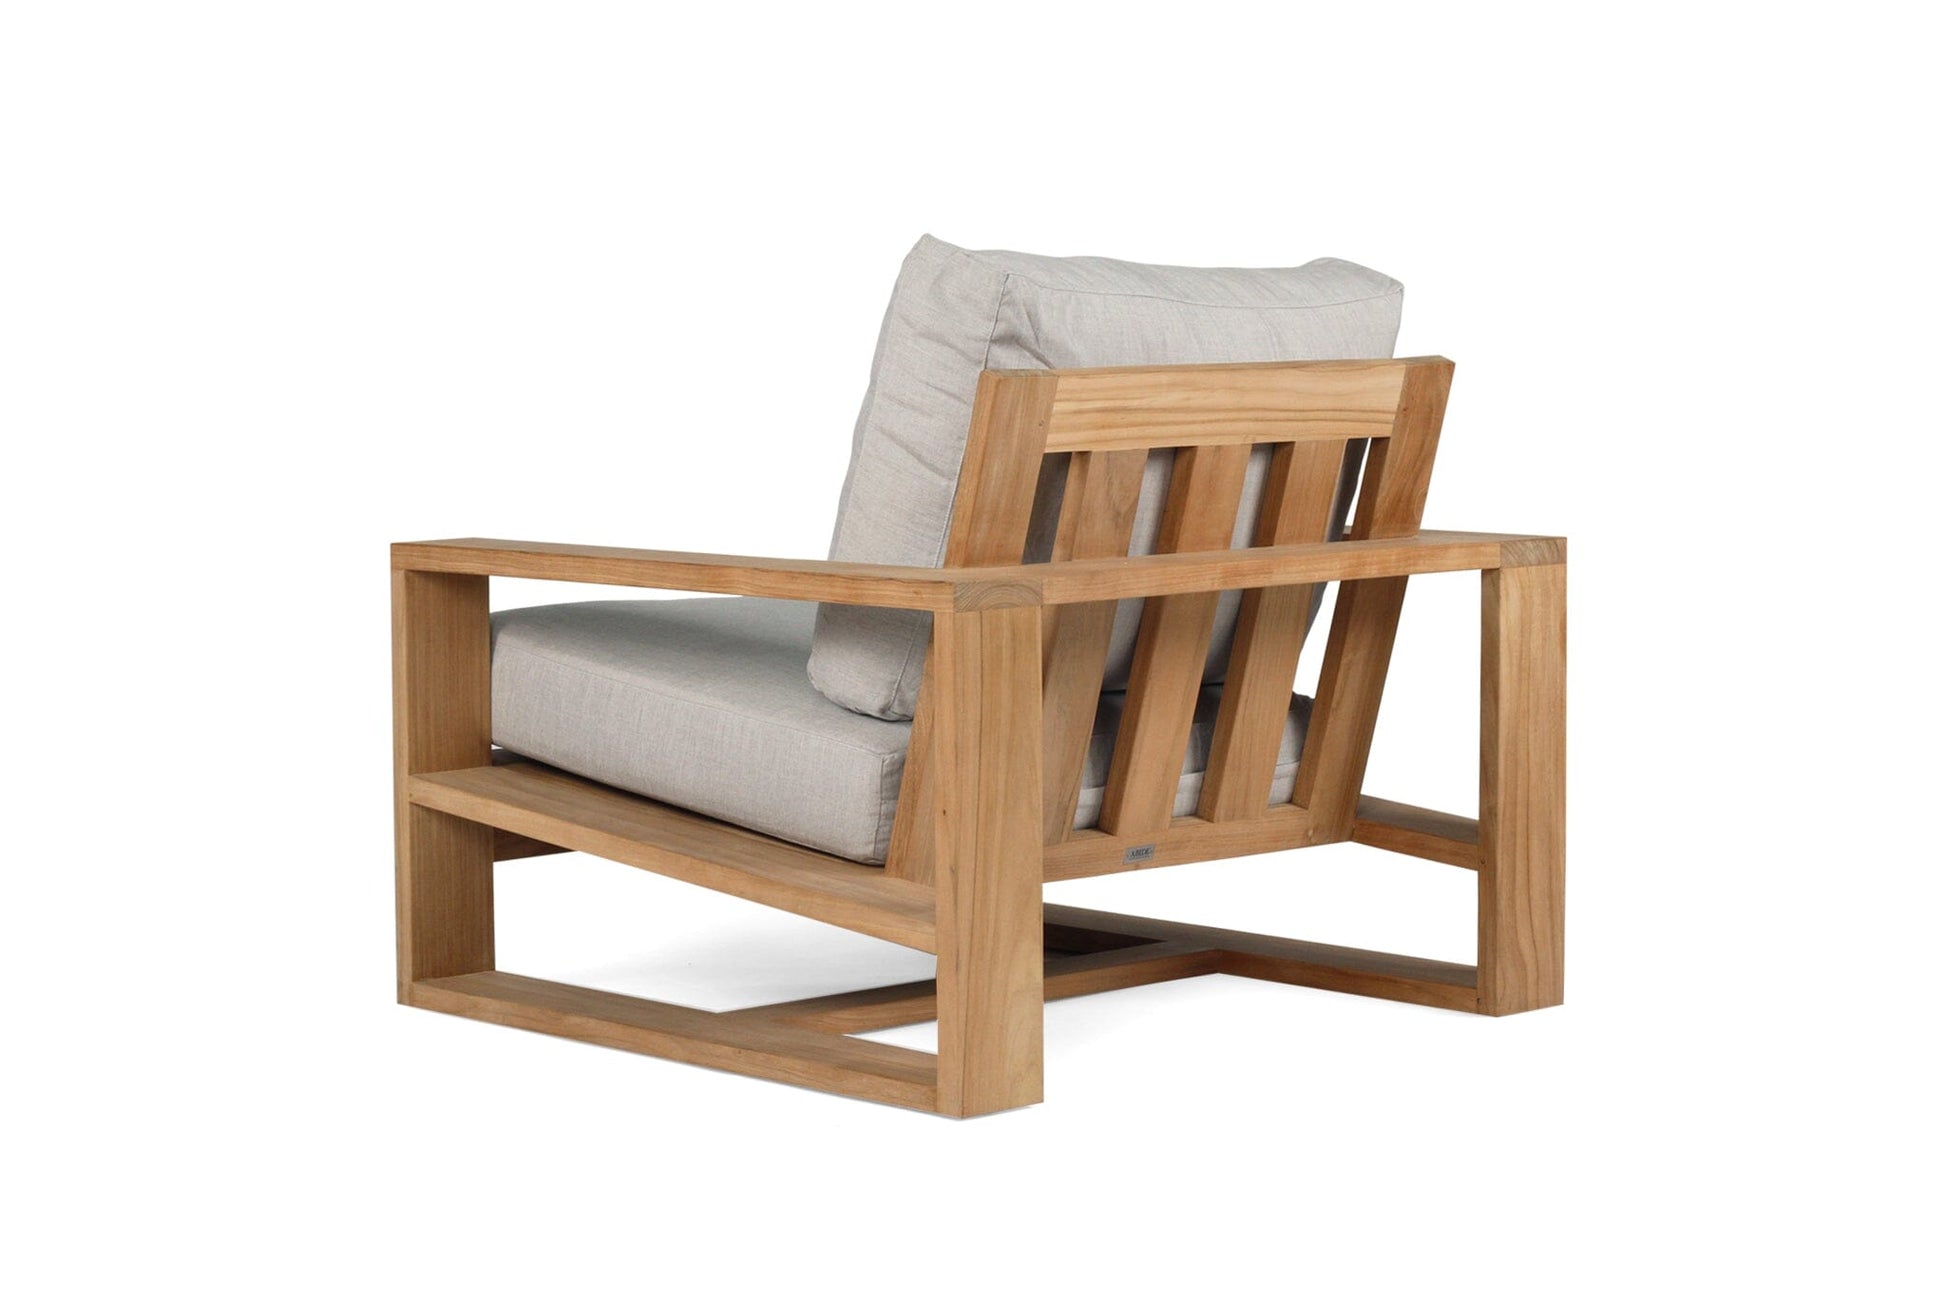 1 Seat Coastal Outdoor Sofa Chair - Bora Bora Sun Republic